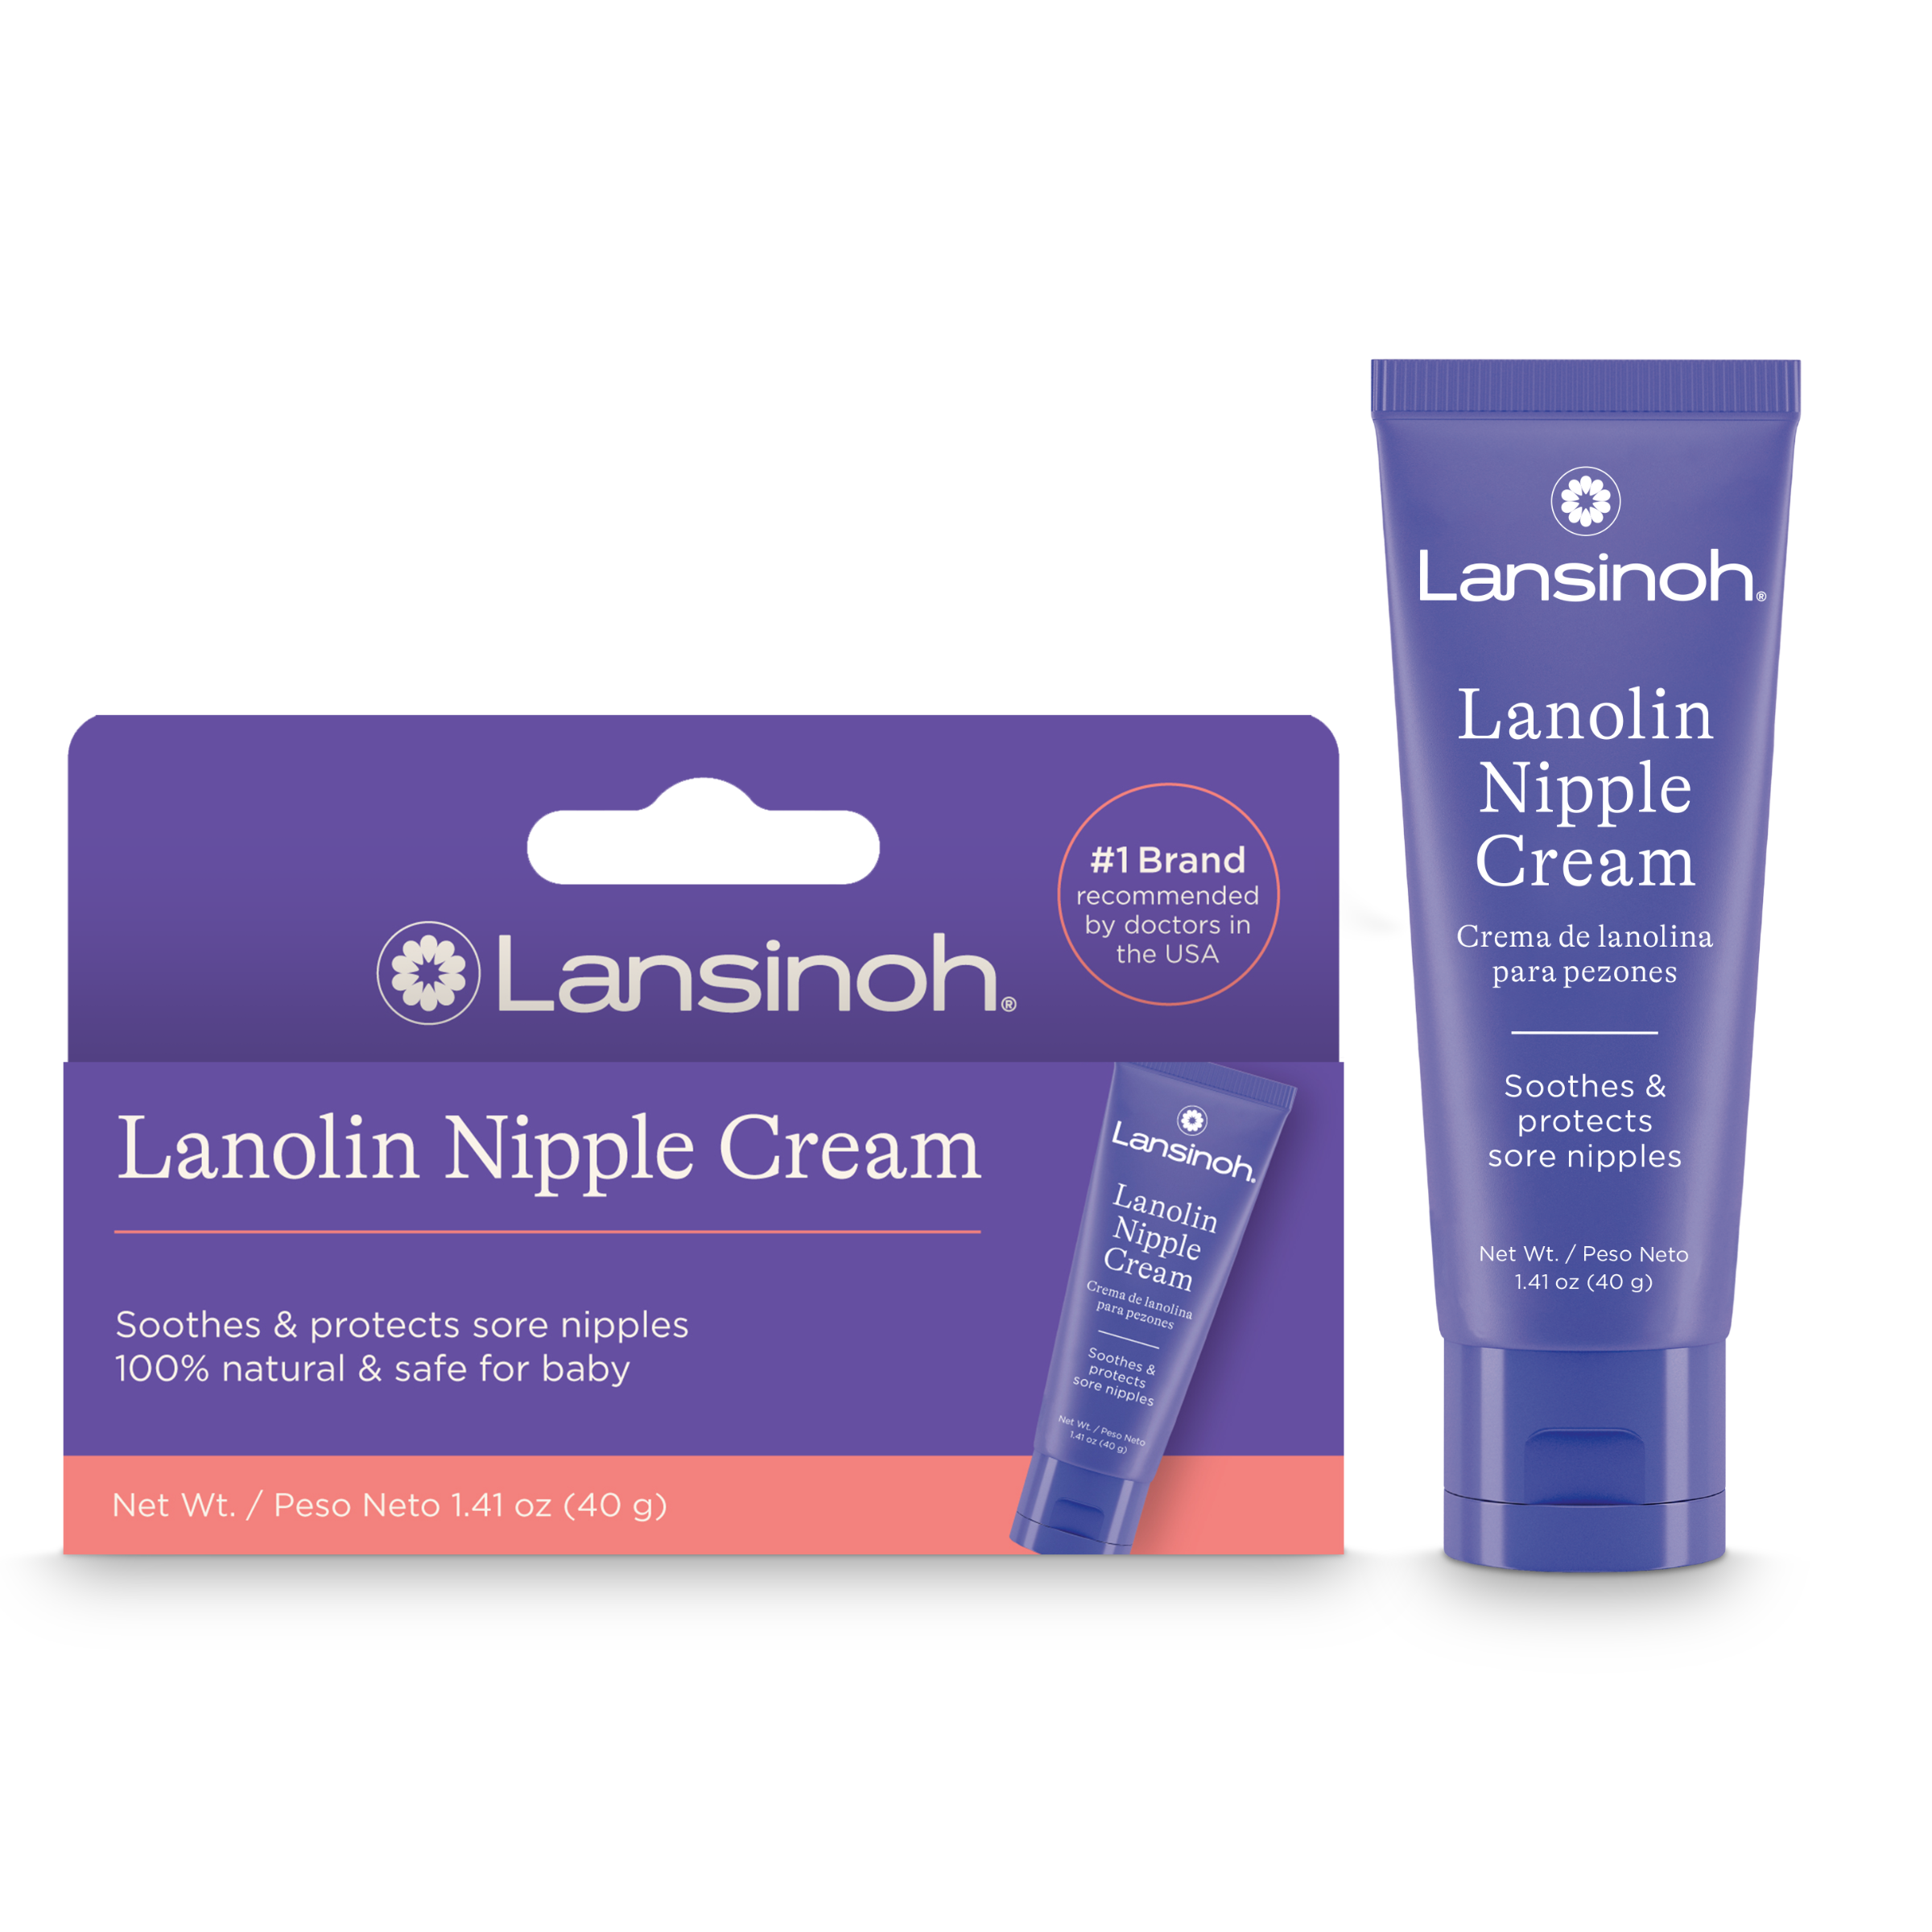 Lansinoh Lanolin Nipple Cream for Breastfeeding Moms, 1.41 Ounces - image 1 of 8